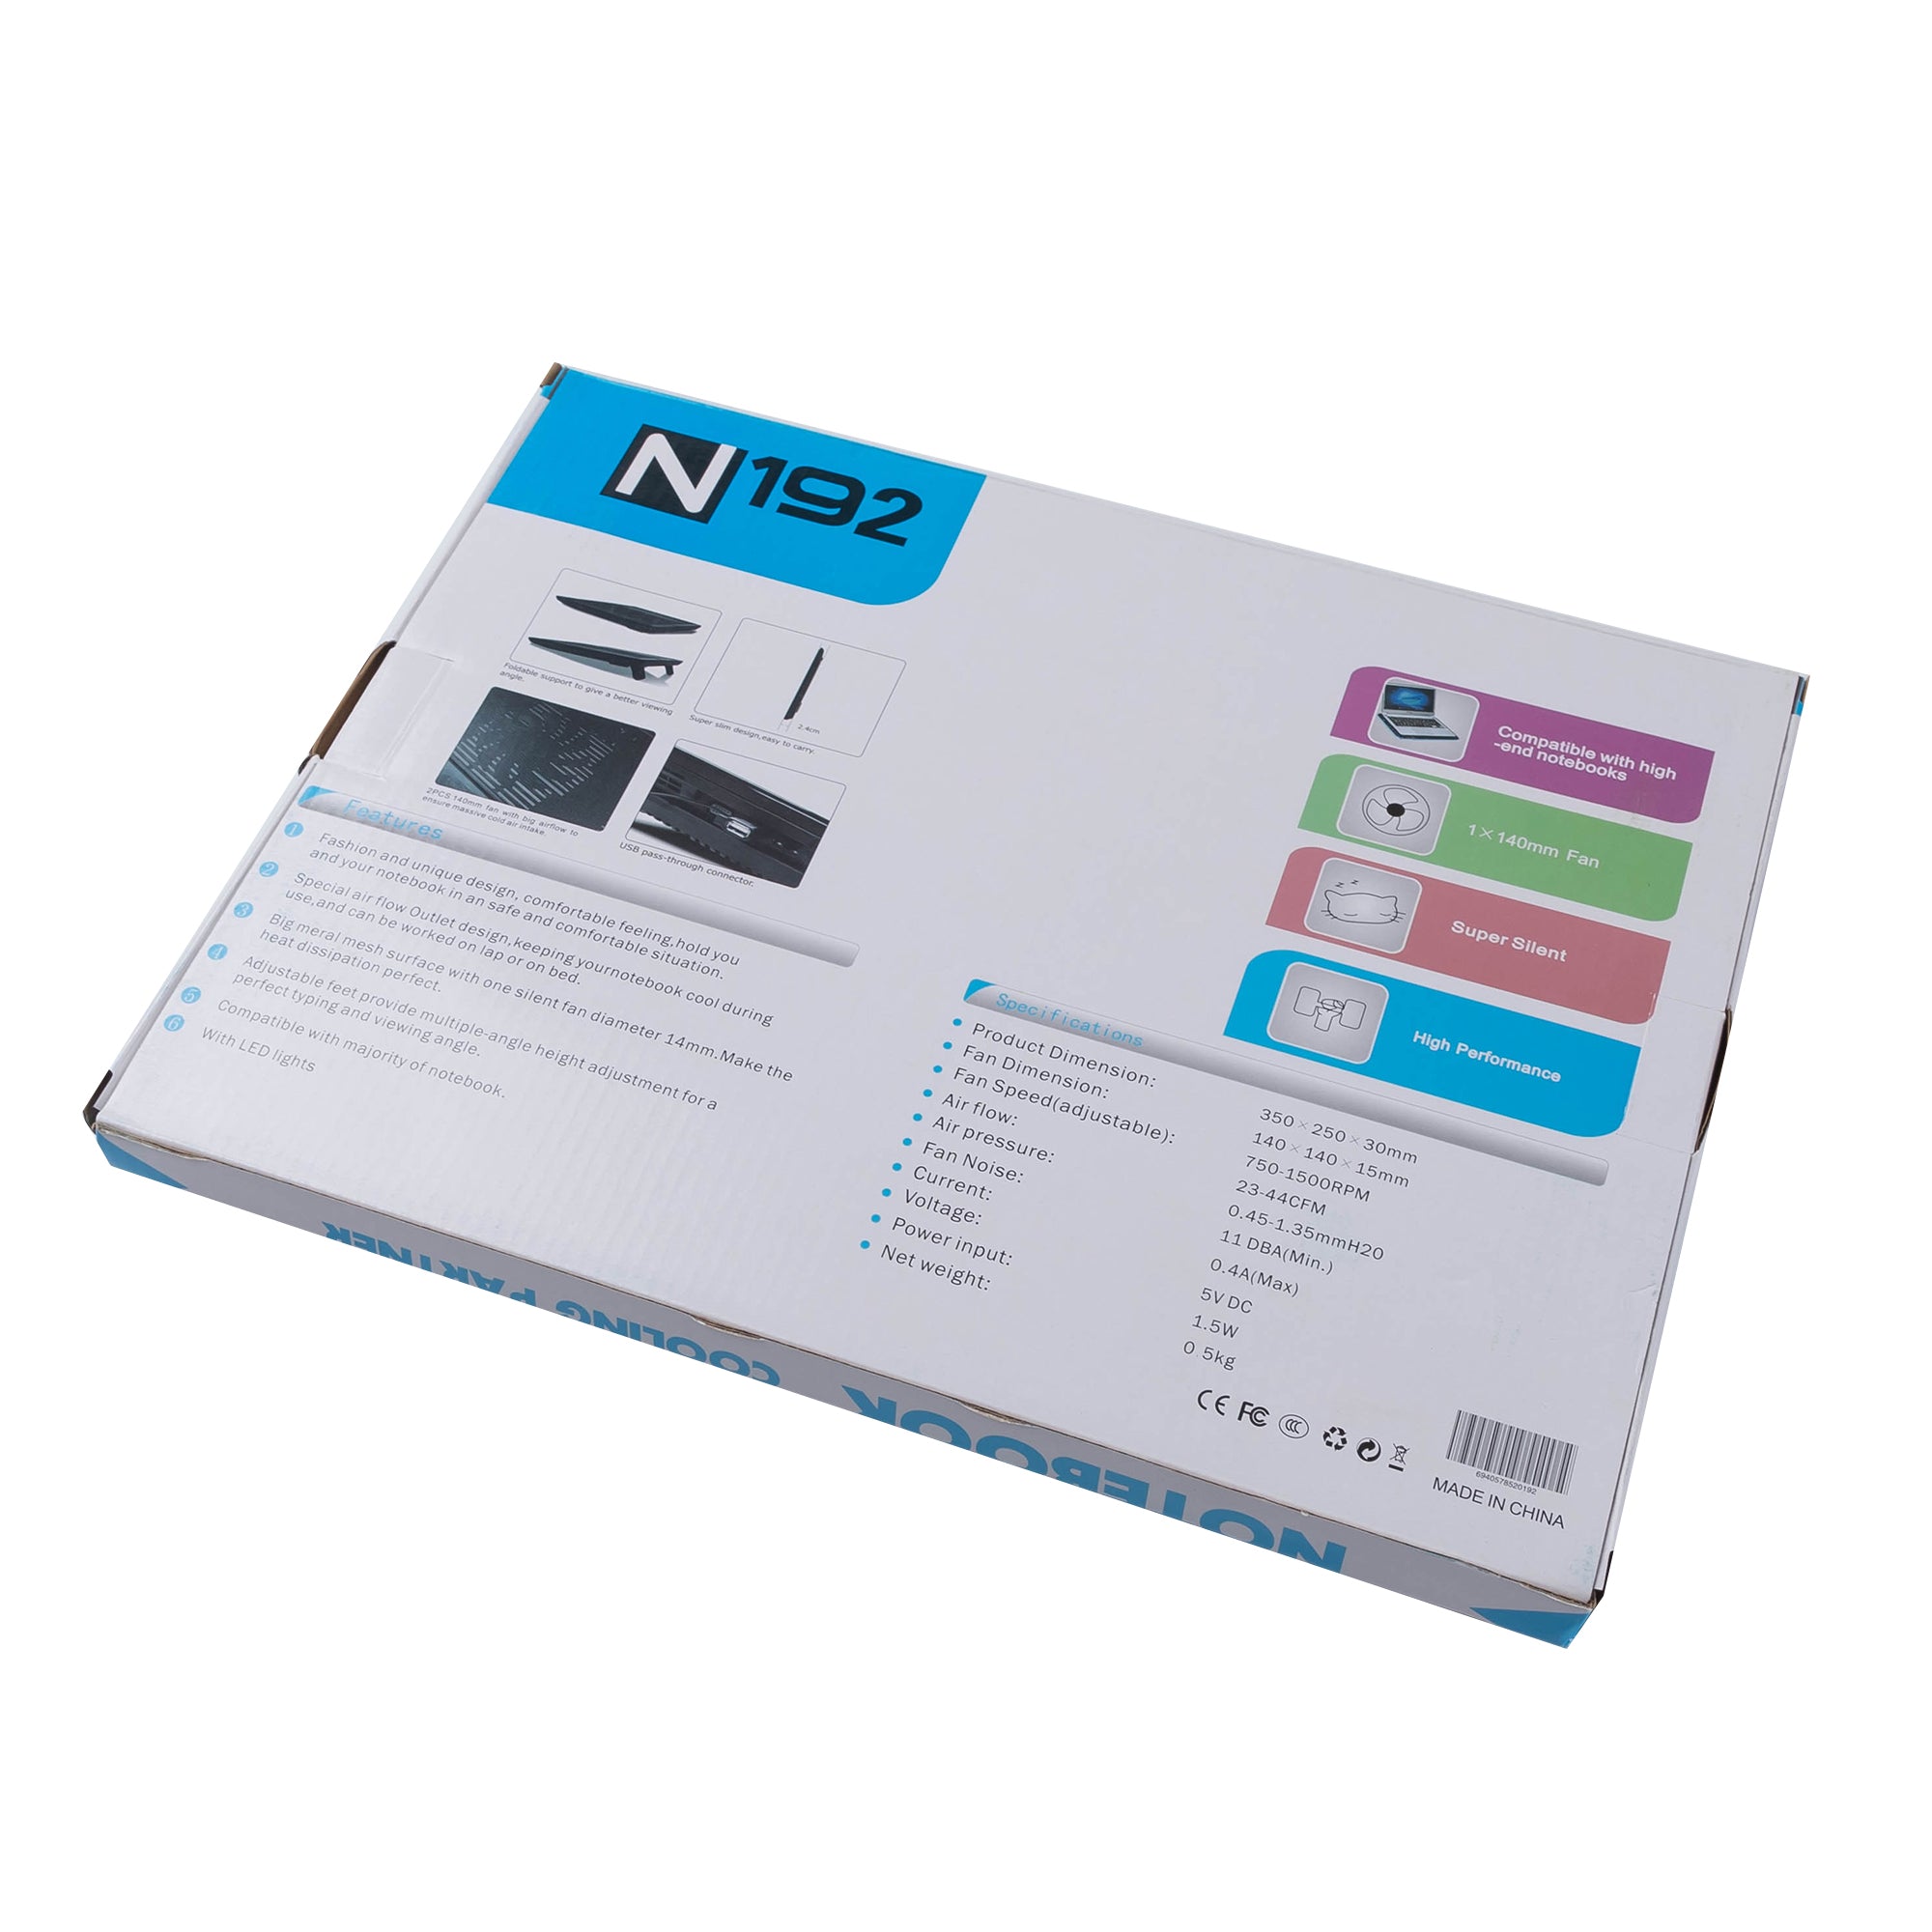 N192 Desktop Laptop Cooling Pad Notebook Heat Dissipation Stand Dual Fan Cooler